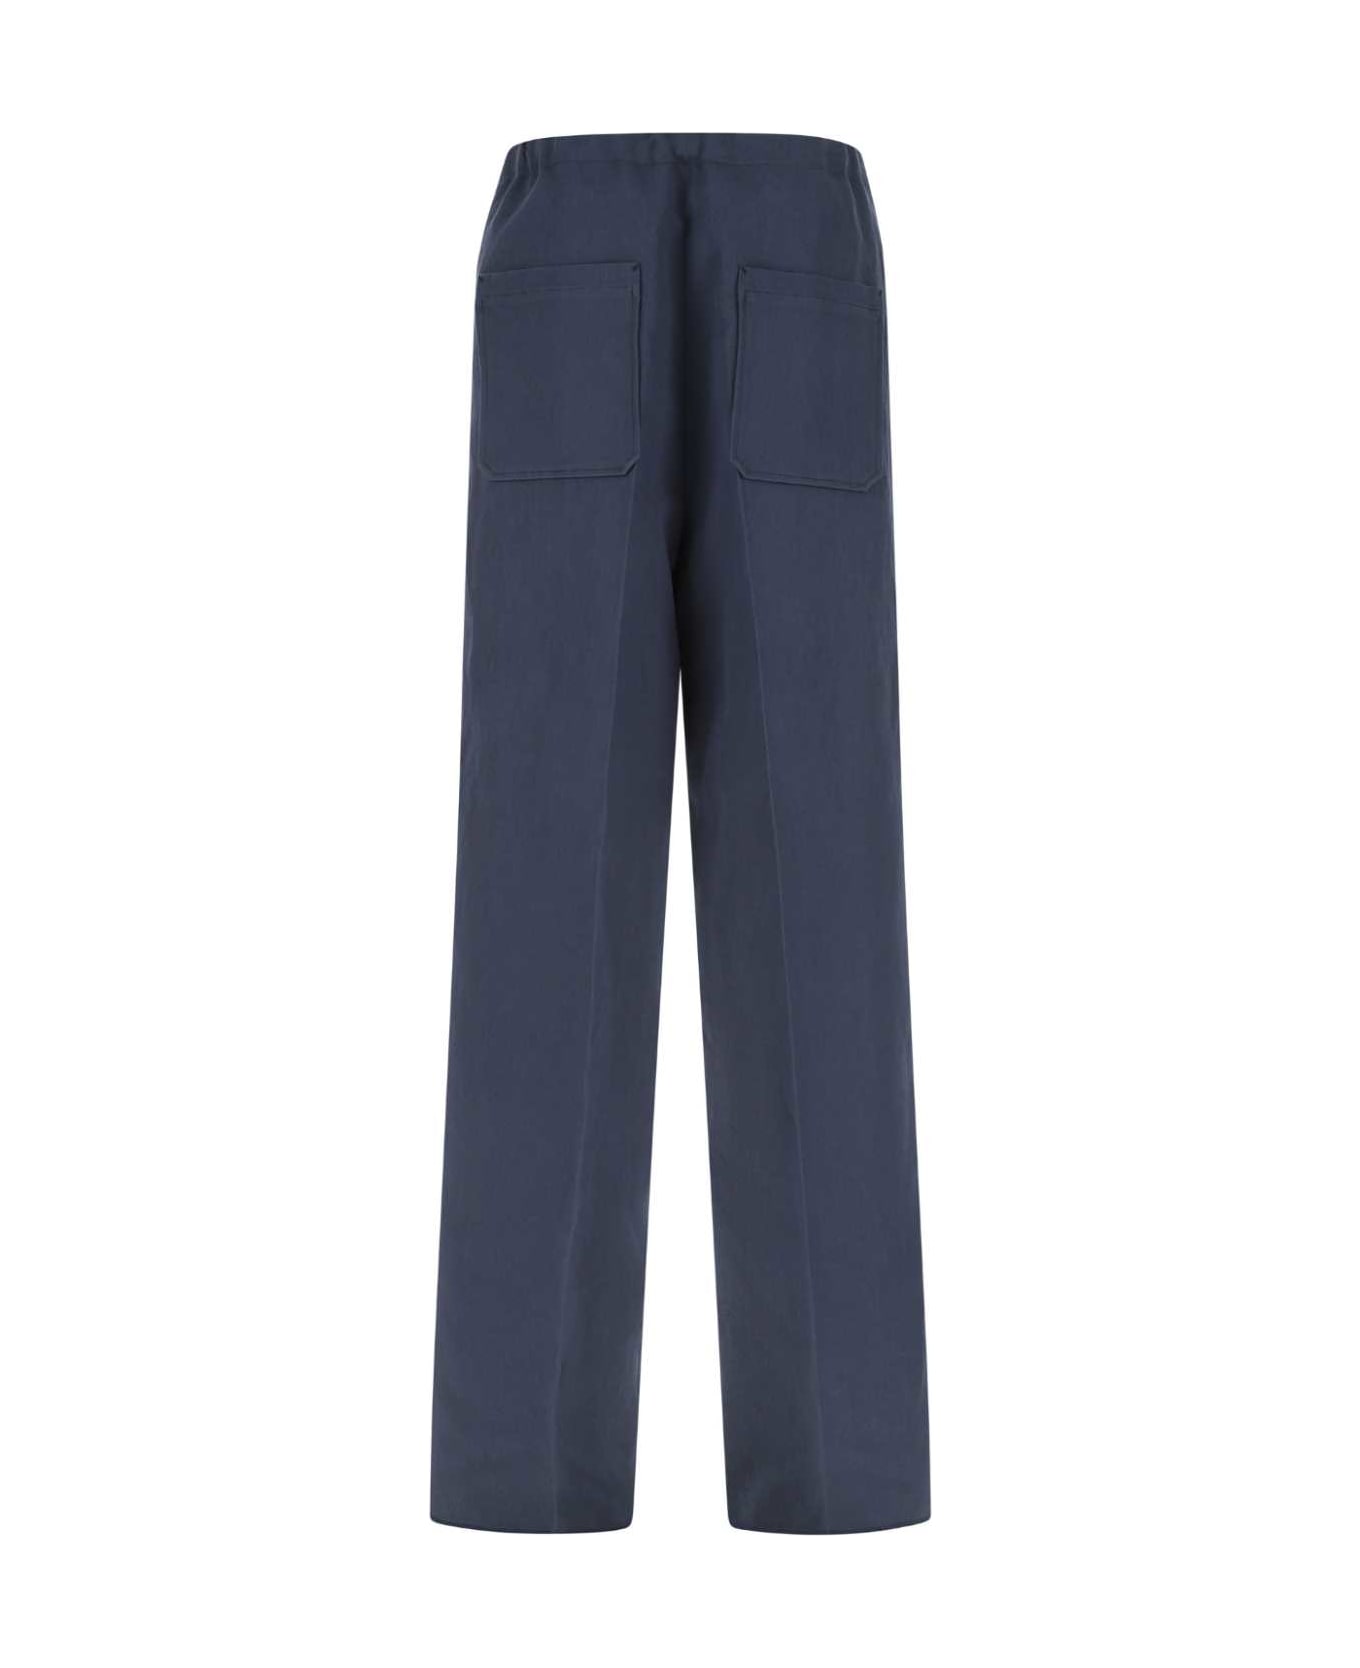 Zegna Navy Blue Cotton Blend Wide-leg Pant - NAVY